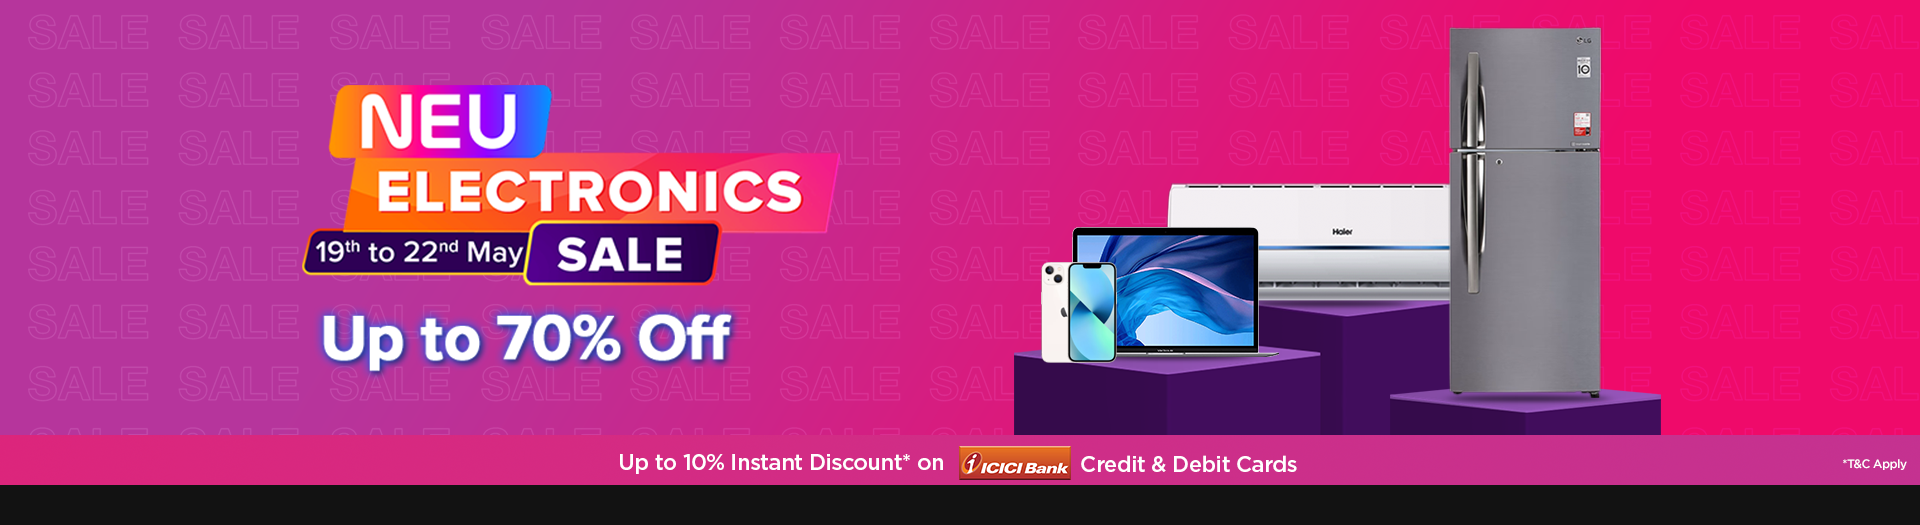 croma.com - Neu Electronics Sale – Upto 70% Off